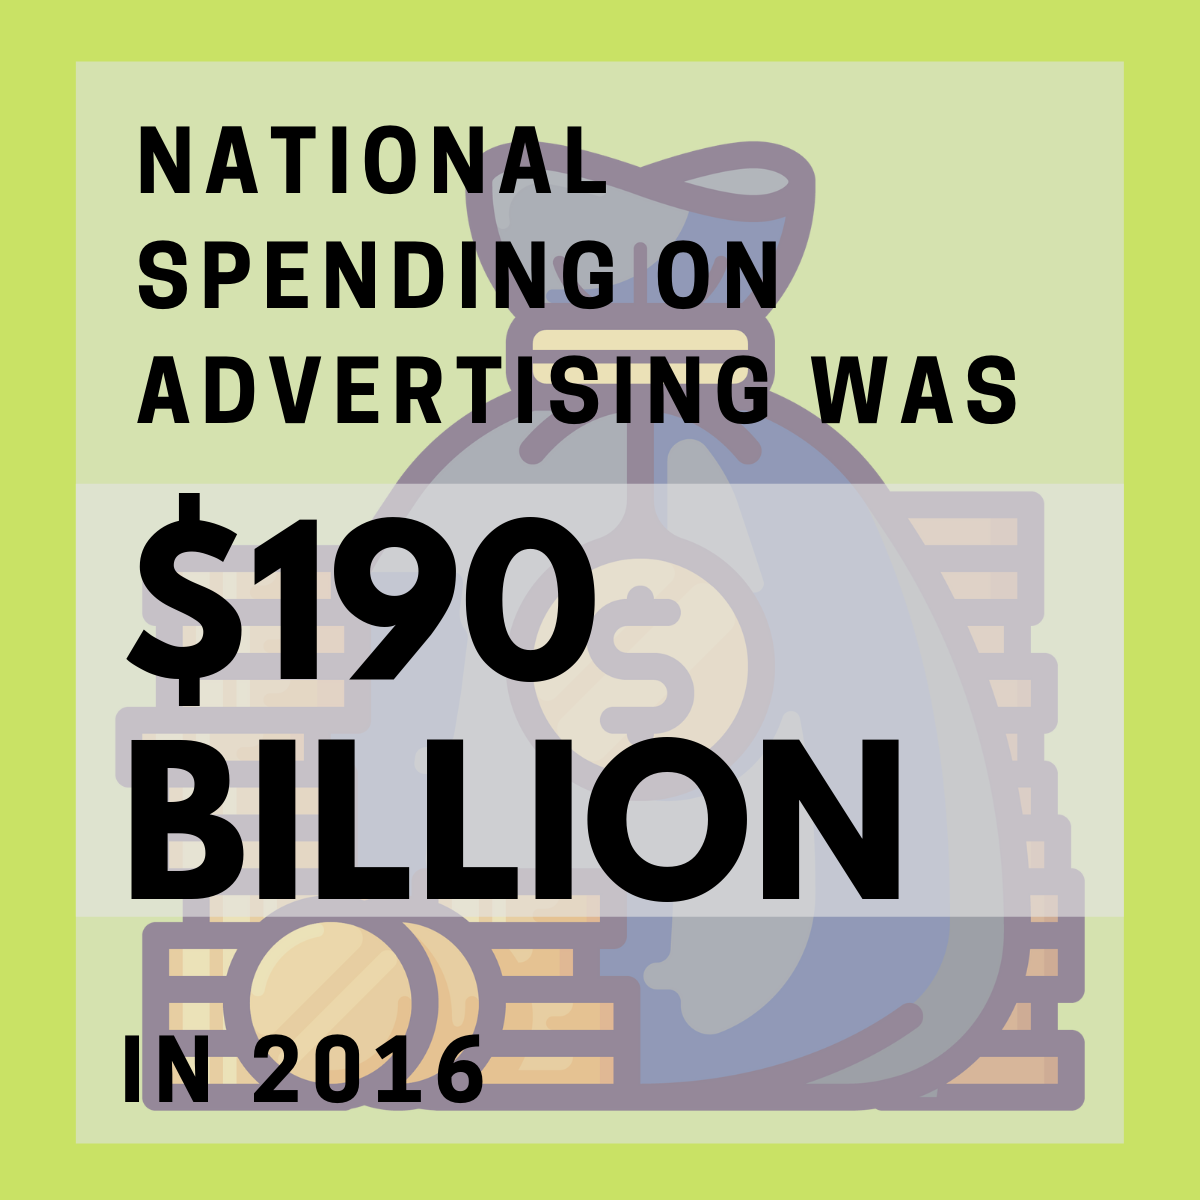 National Spending on Advertising was $190 Billion in 2016